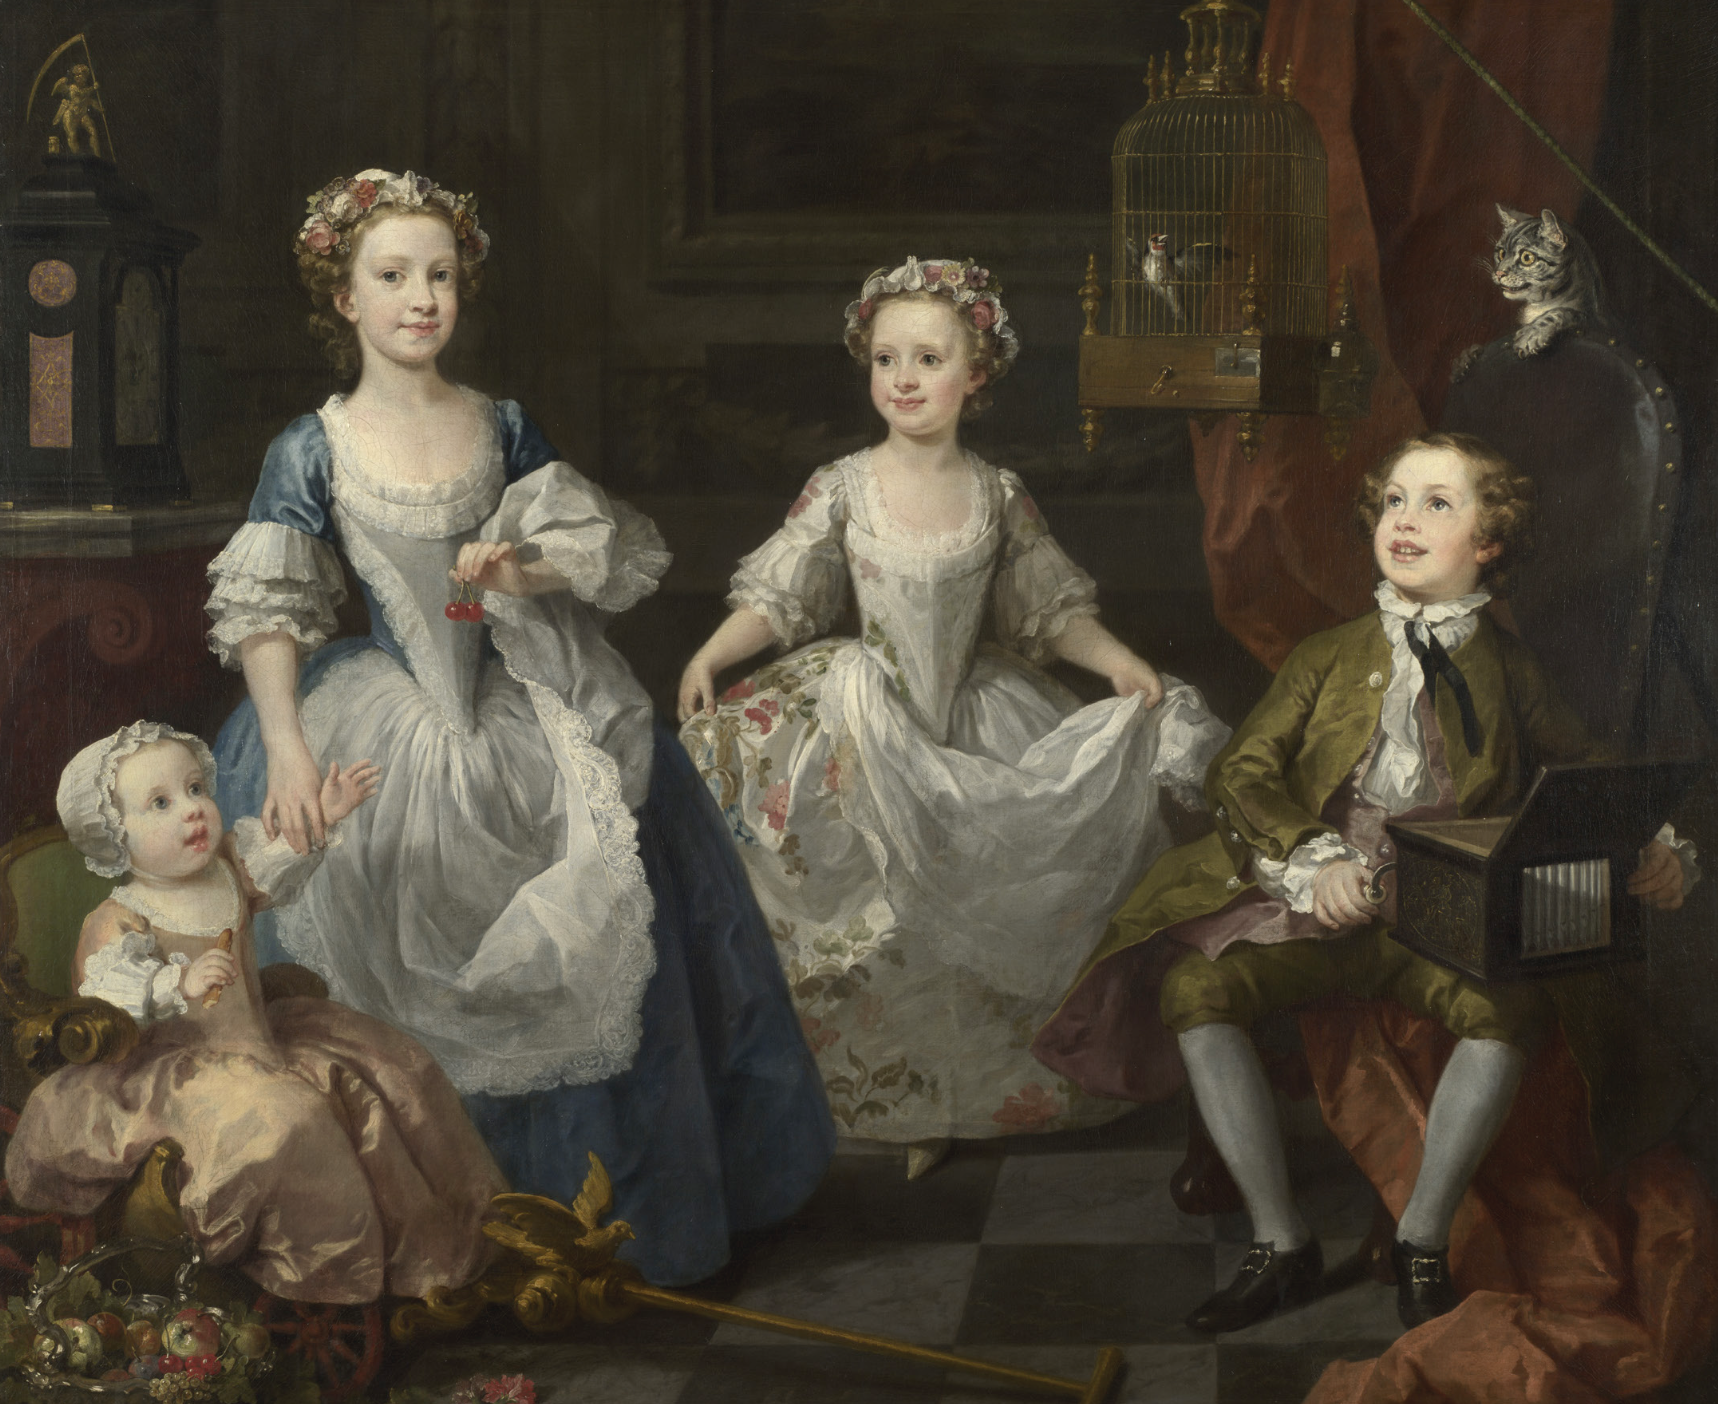 Finding Family William Hogarth, The Graham Children, 1742 © The National Gallery, London